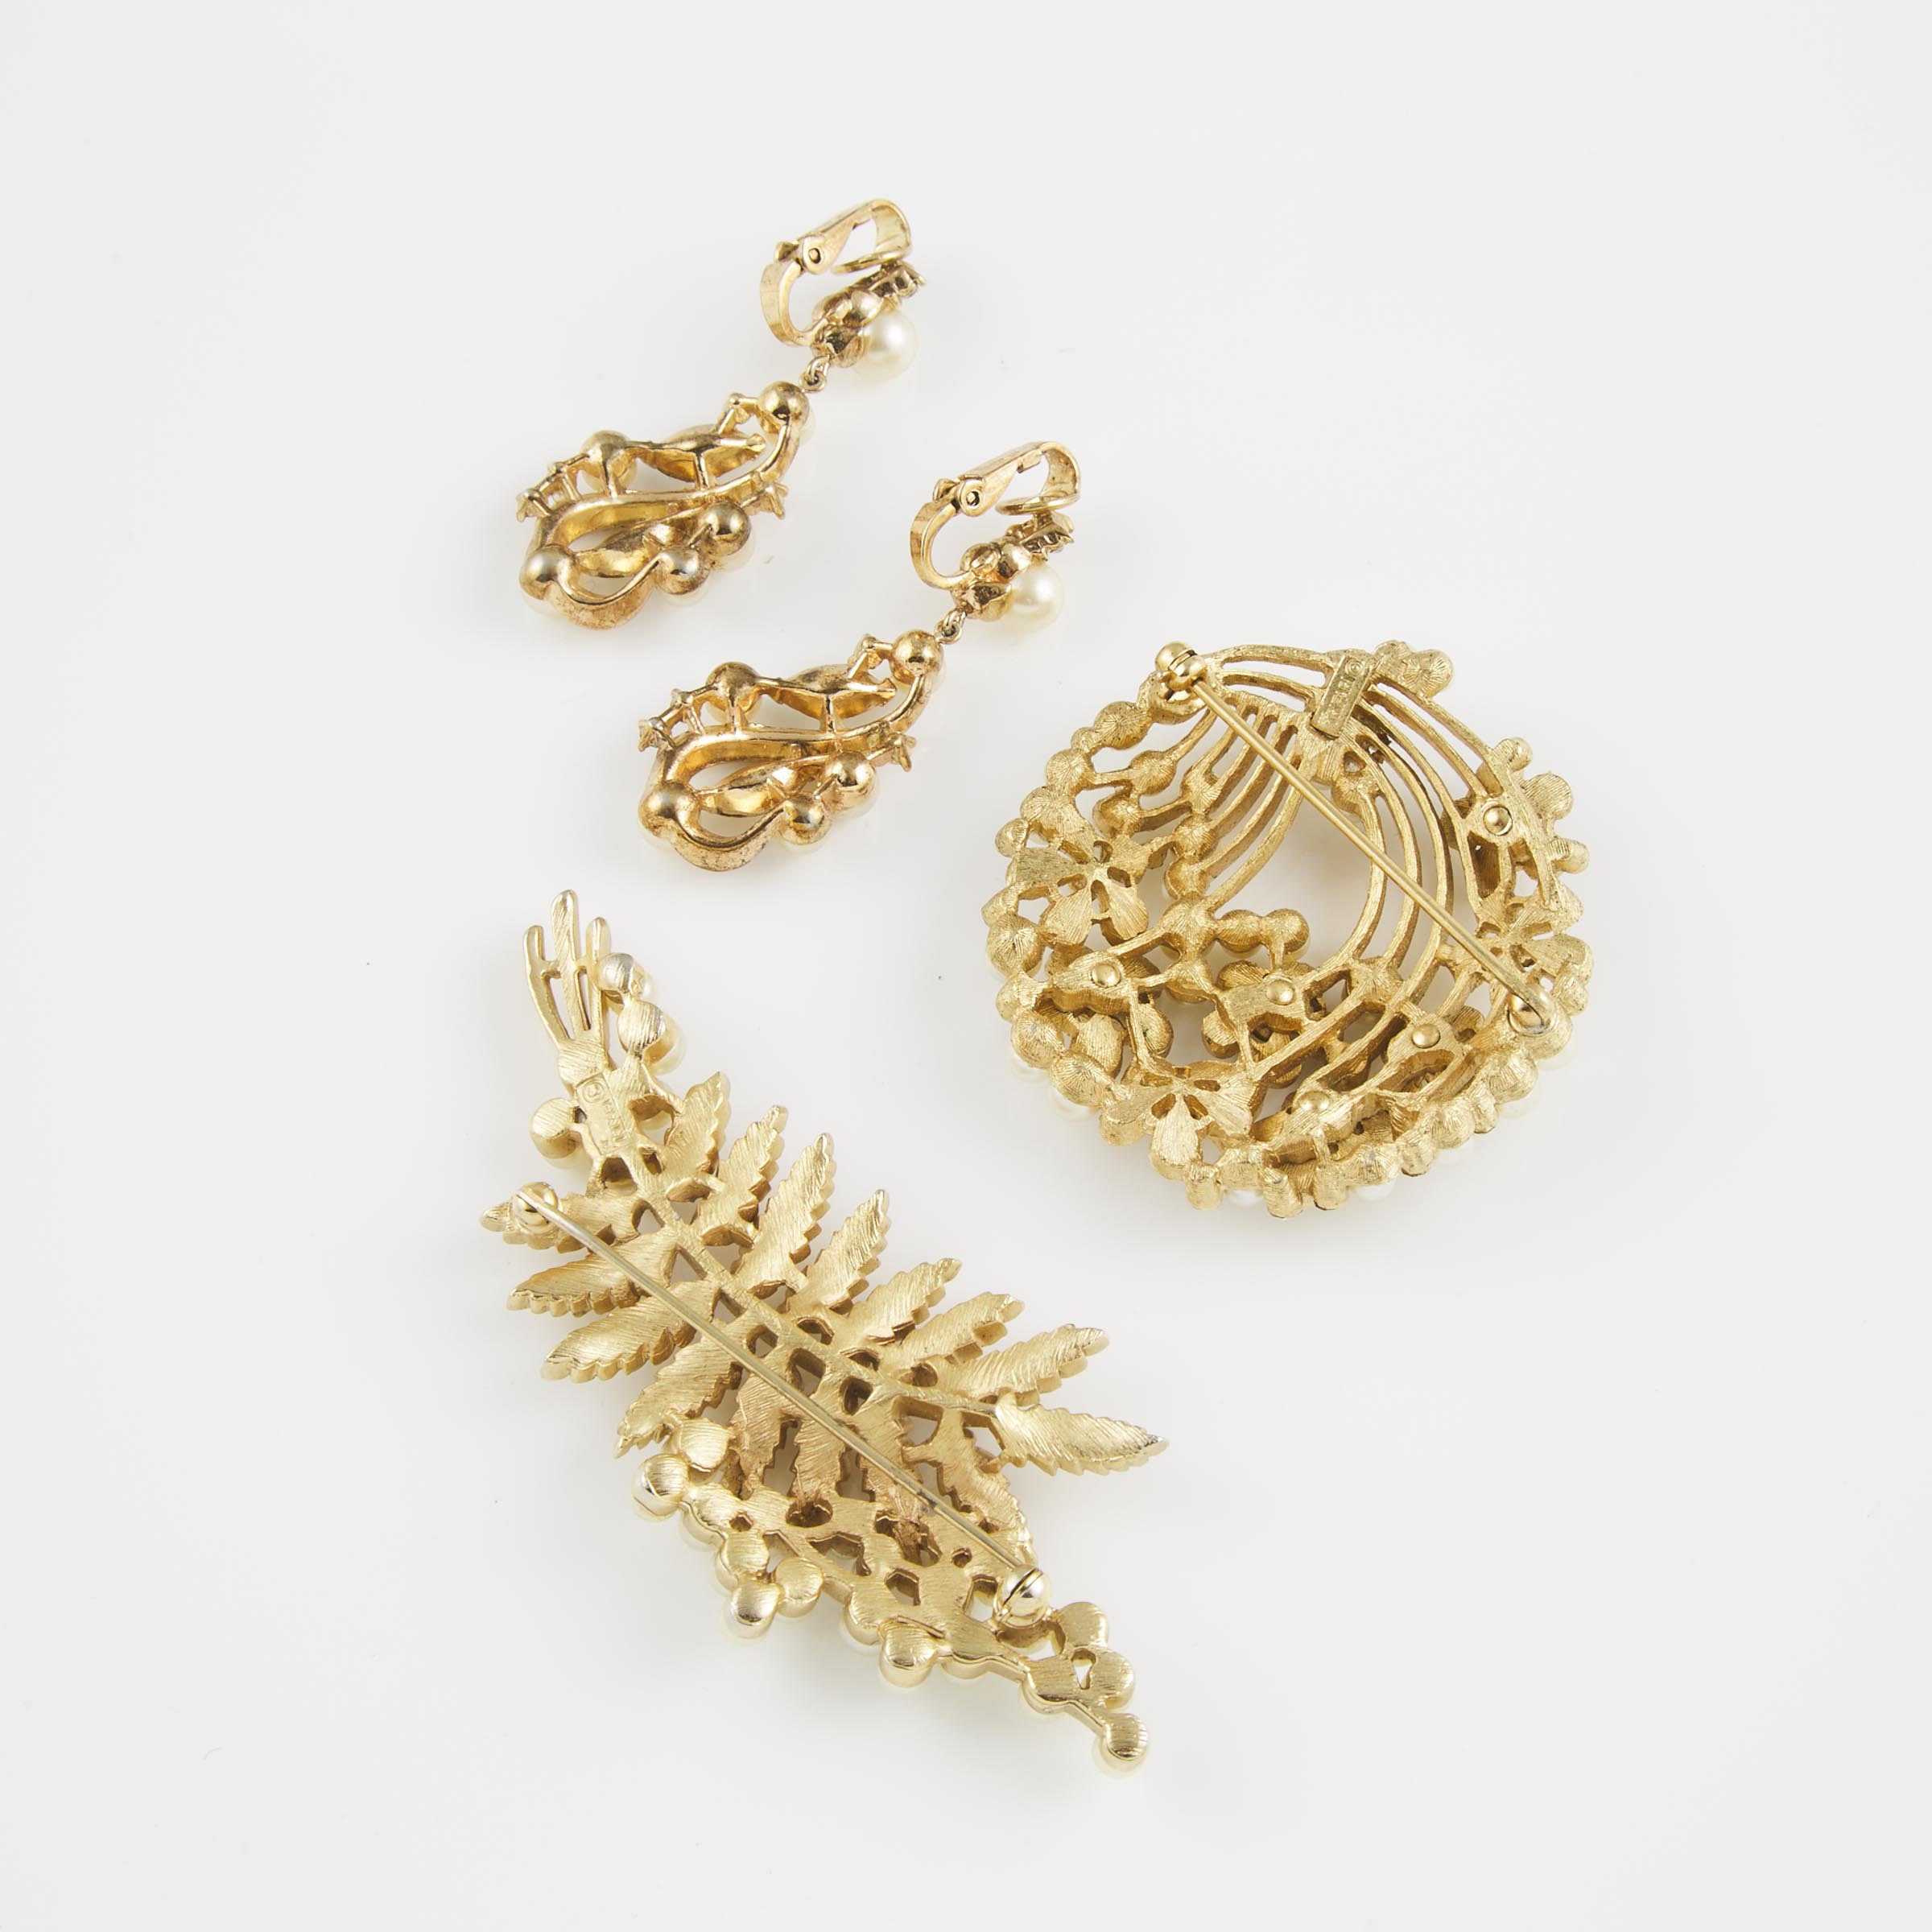 4 Pieces Of Trifari Gold-Tone Metal Jewellery